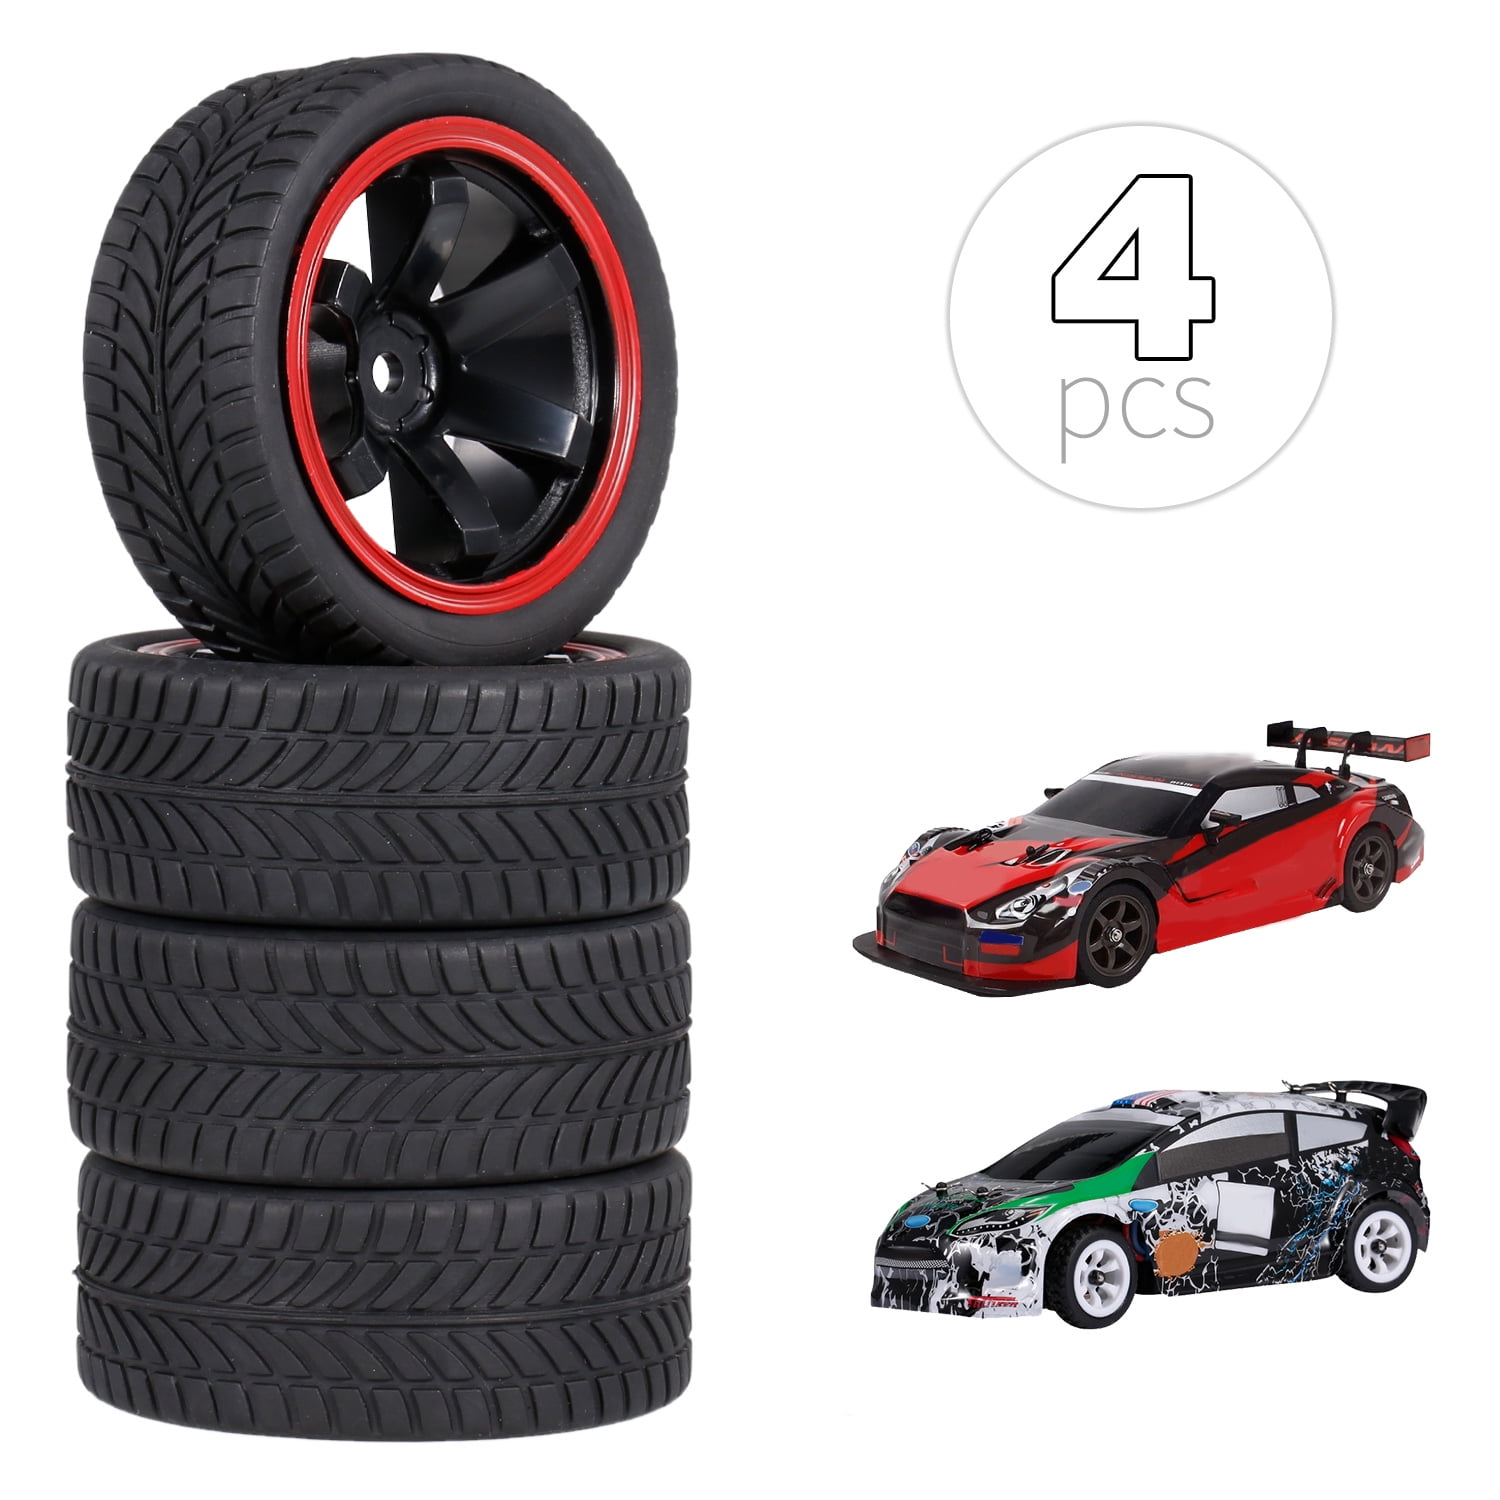 4pcs Tires & Rim Wheel for 1/10 HSP HPI Traxxas On-Road Racing Car C